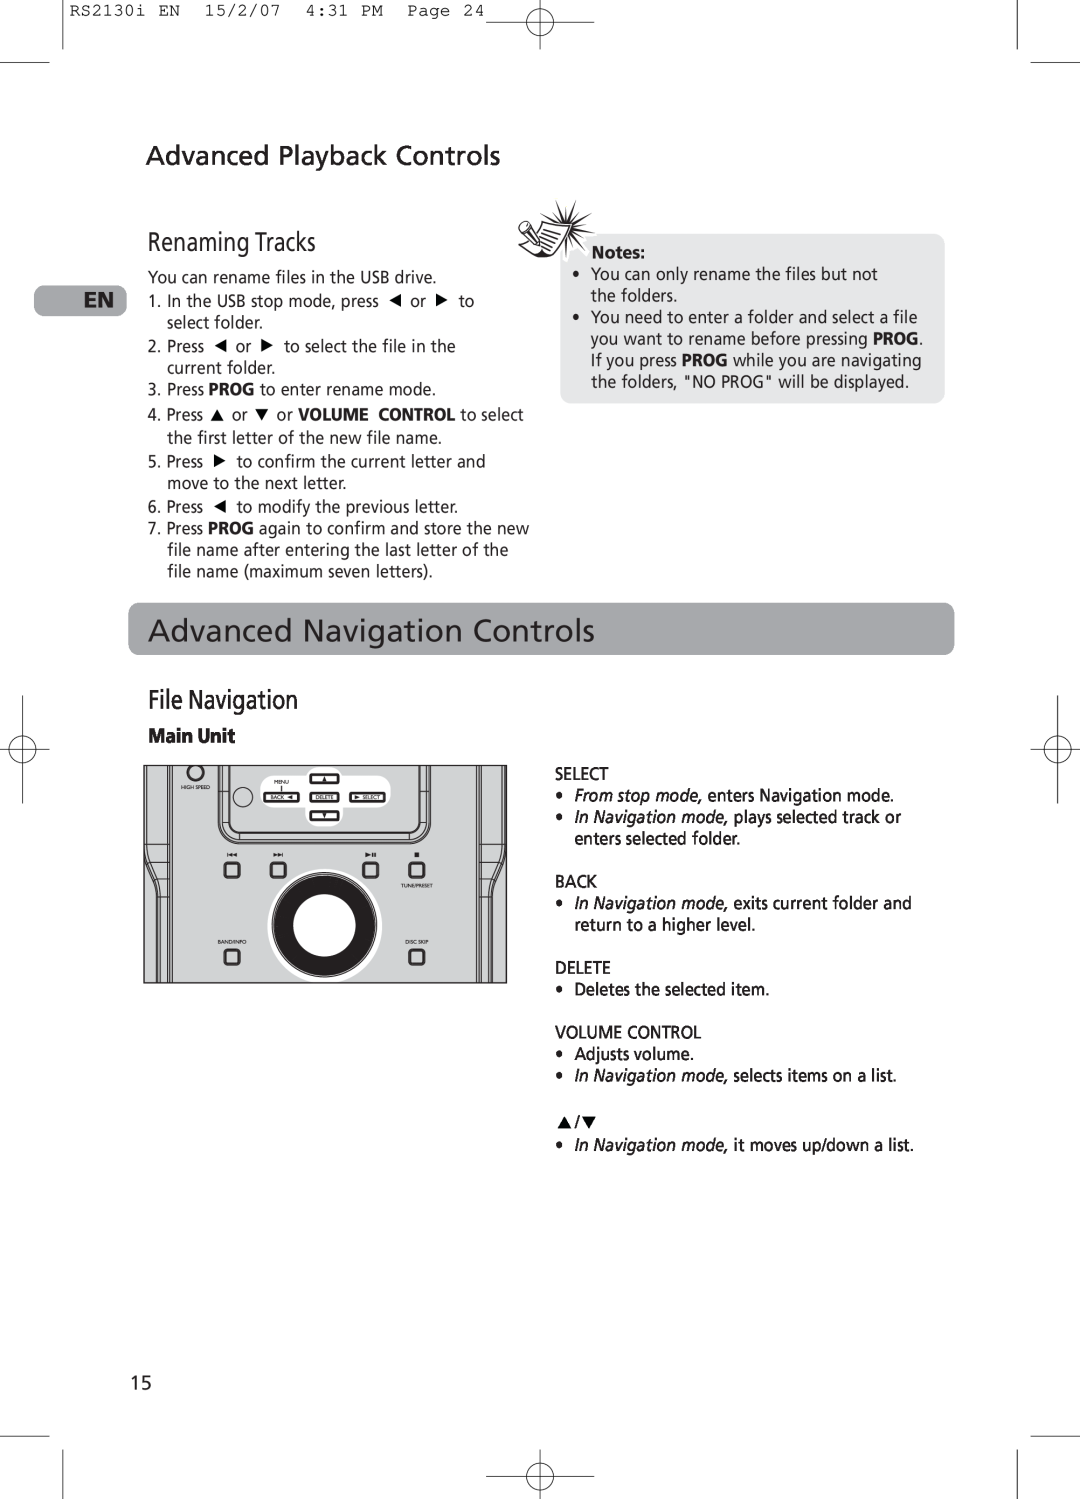 RCA RS2130i Advanced Navigation Controls, Advanced Playback Controls Renaming Tracks, File Navigation, Main Unit 